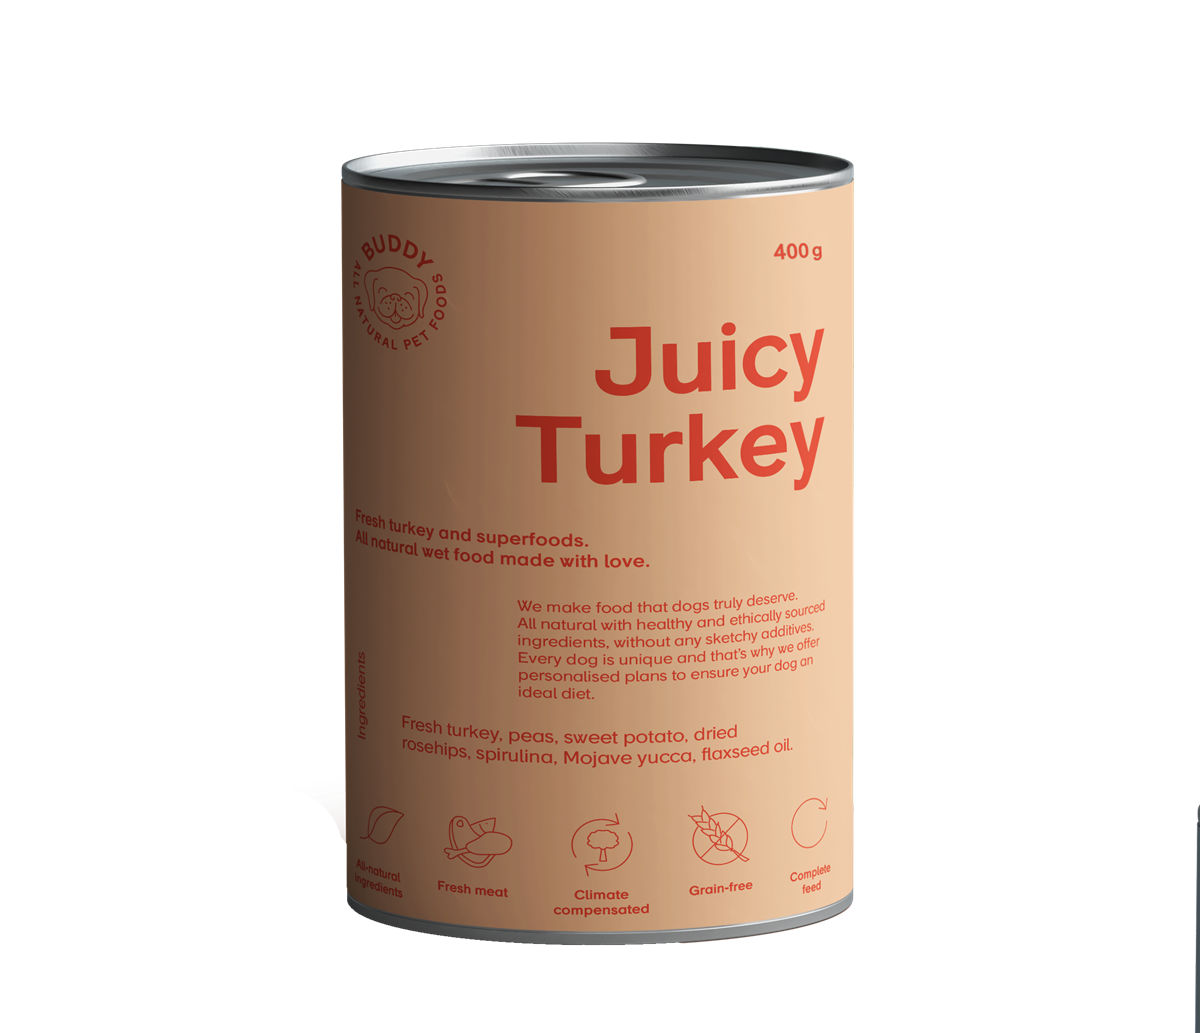 BUDDY Juicy Turkey 400g